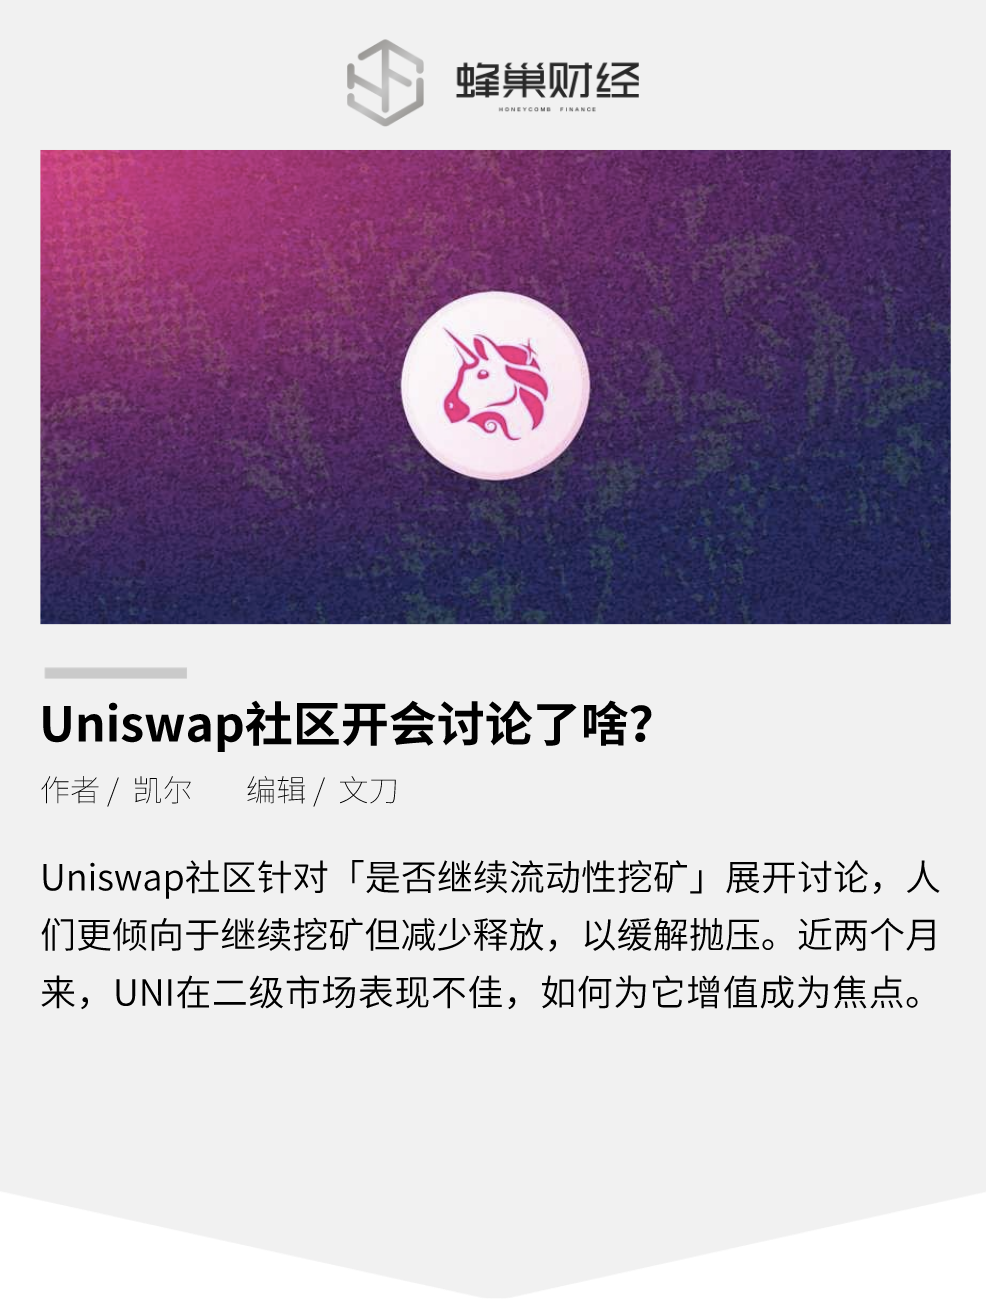 Uniswap 社区开会讨论了啥？市场表现不佳的Unisw